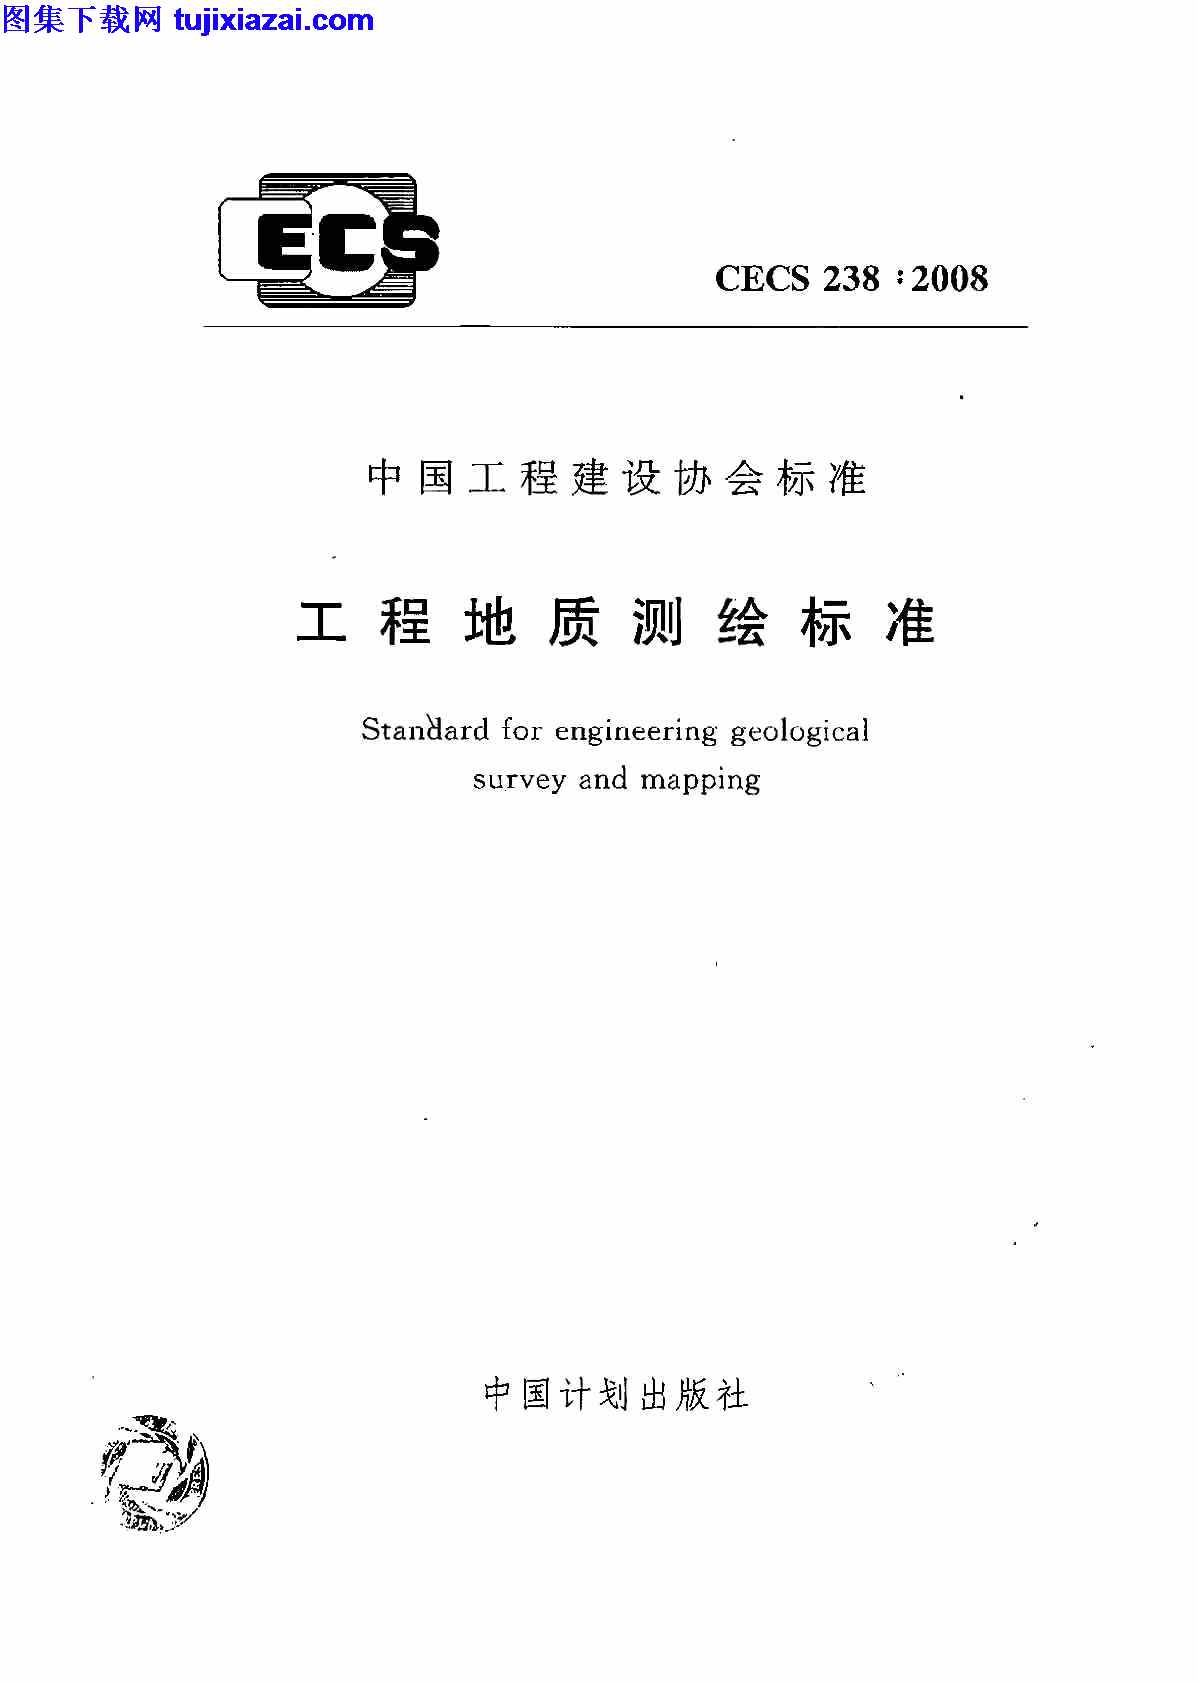 CECS238-2008,工程地质测绘标准,工程地质测绘标准_设计规范,设计规范,CECS238-2008_工程地质测绘标准_设计规范.pdf